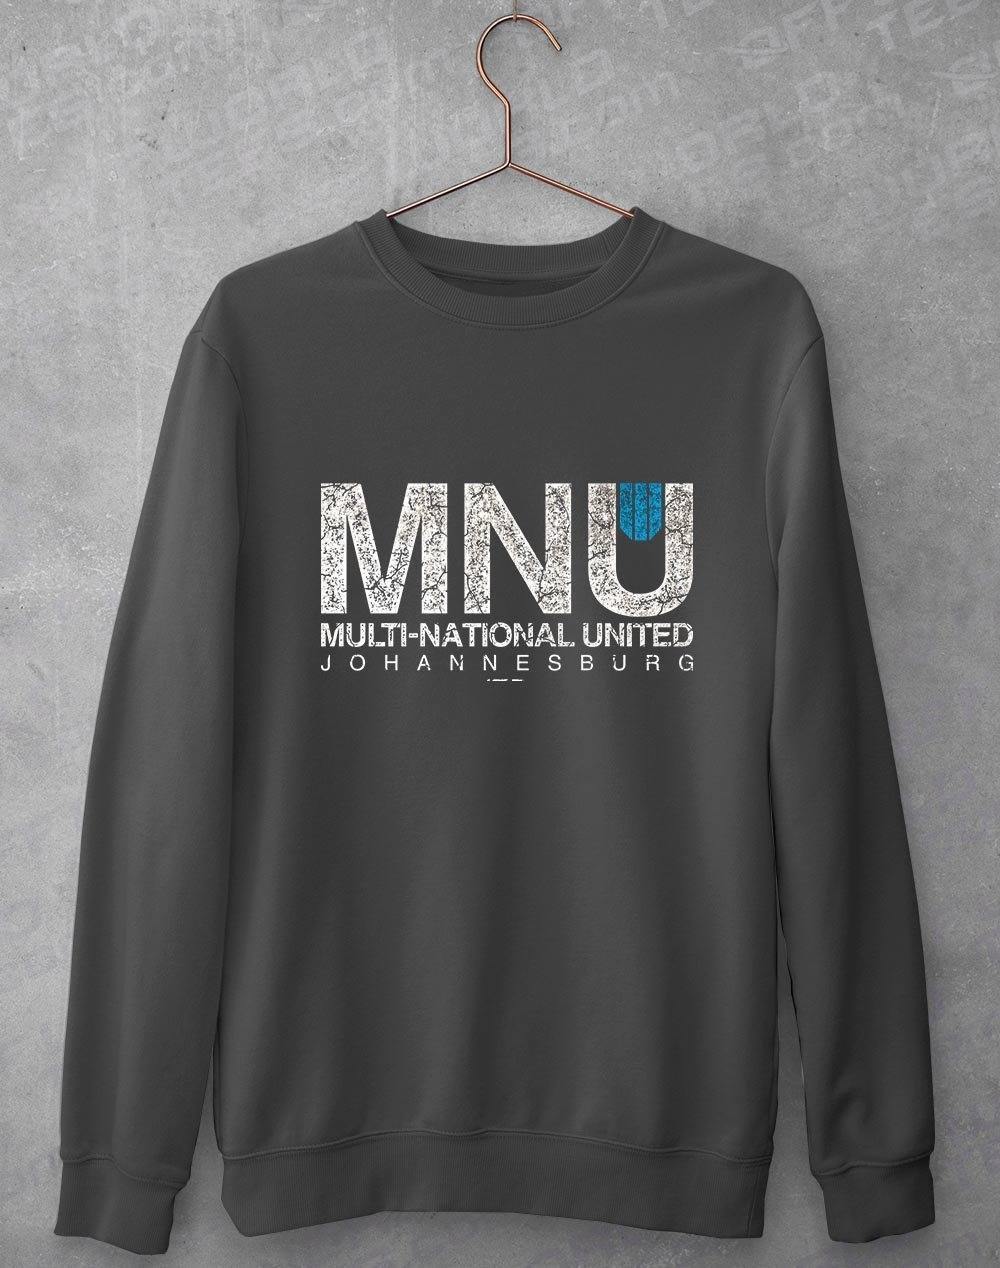 Multi National United Sweatshirt S / Charcoal  - Off World Tees